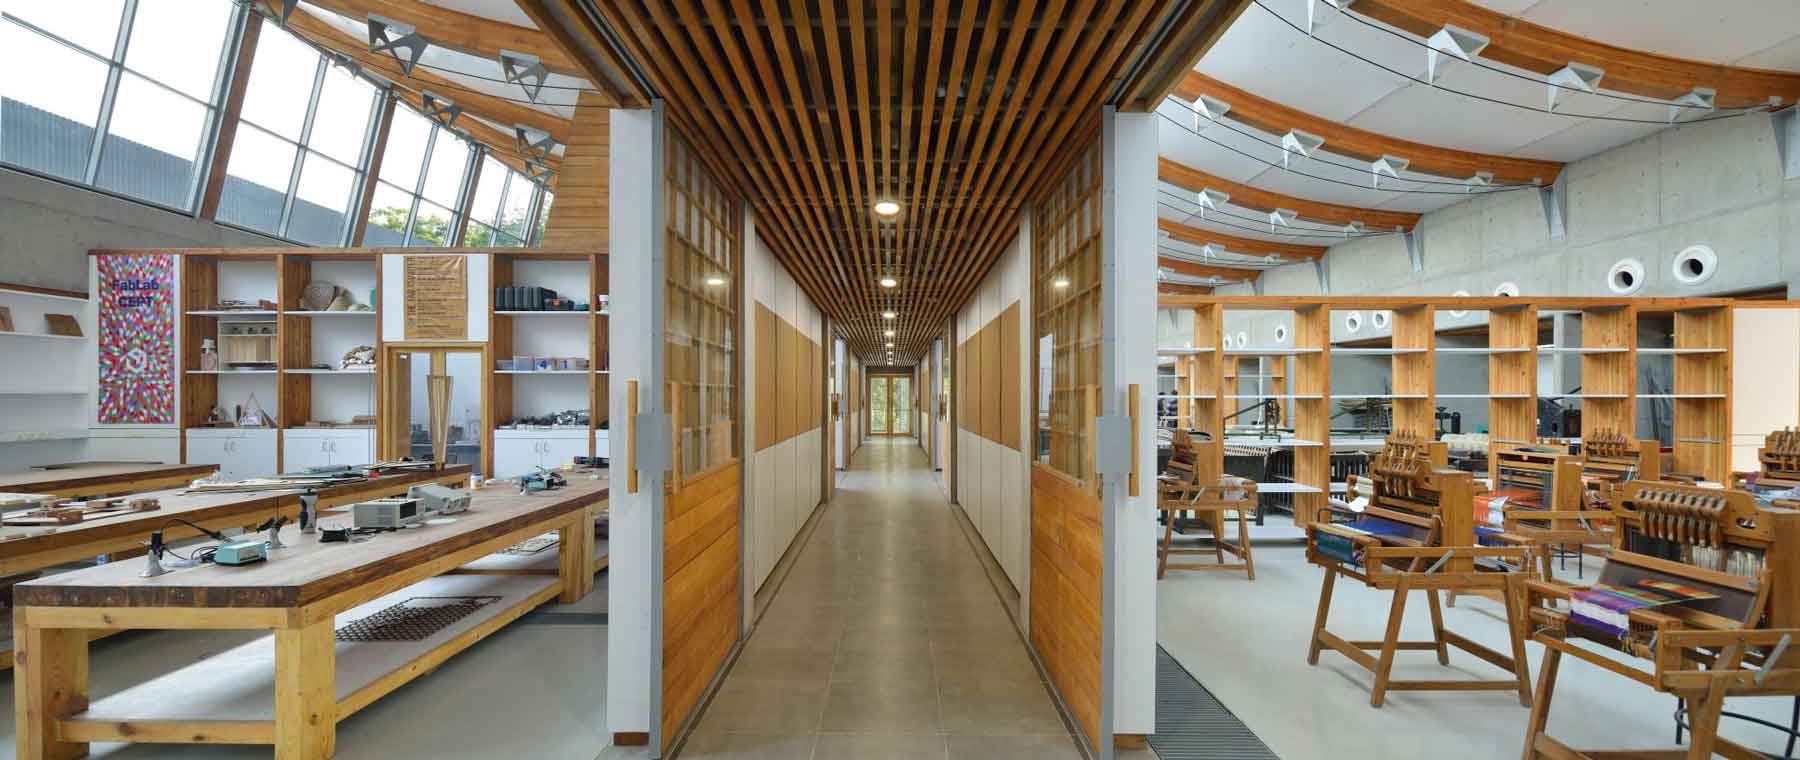 interior-wood-beam-construction-manufacturing-export-timber-canada